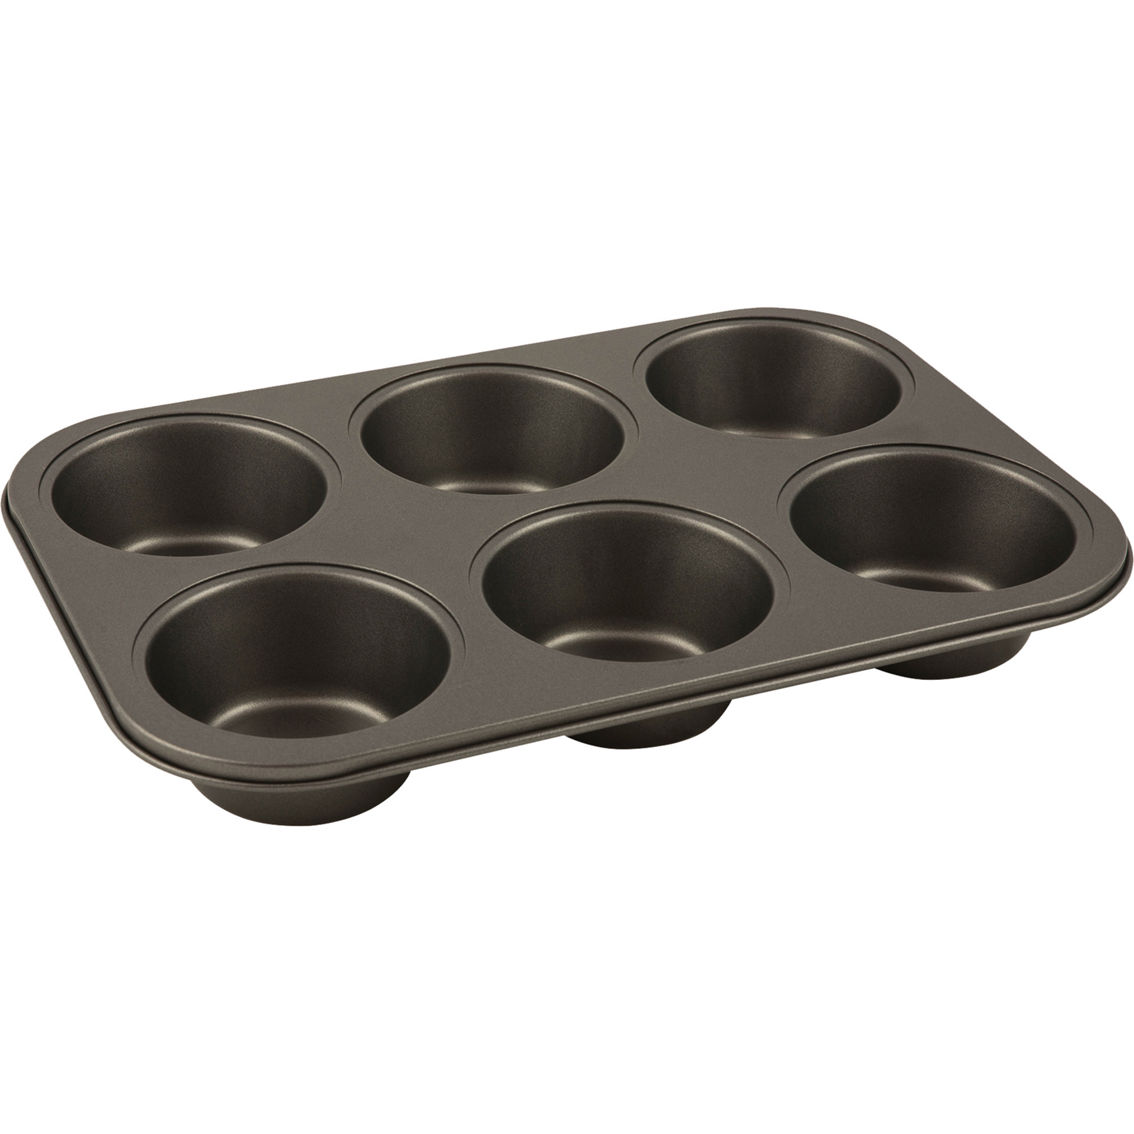 Range Kleen Nonstick 6 Cup Jumbo Muffin Pan - Image 3 of 3